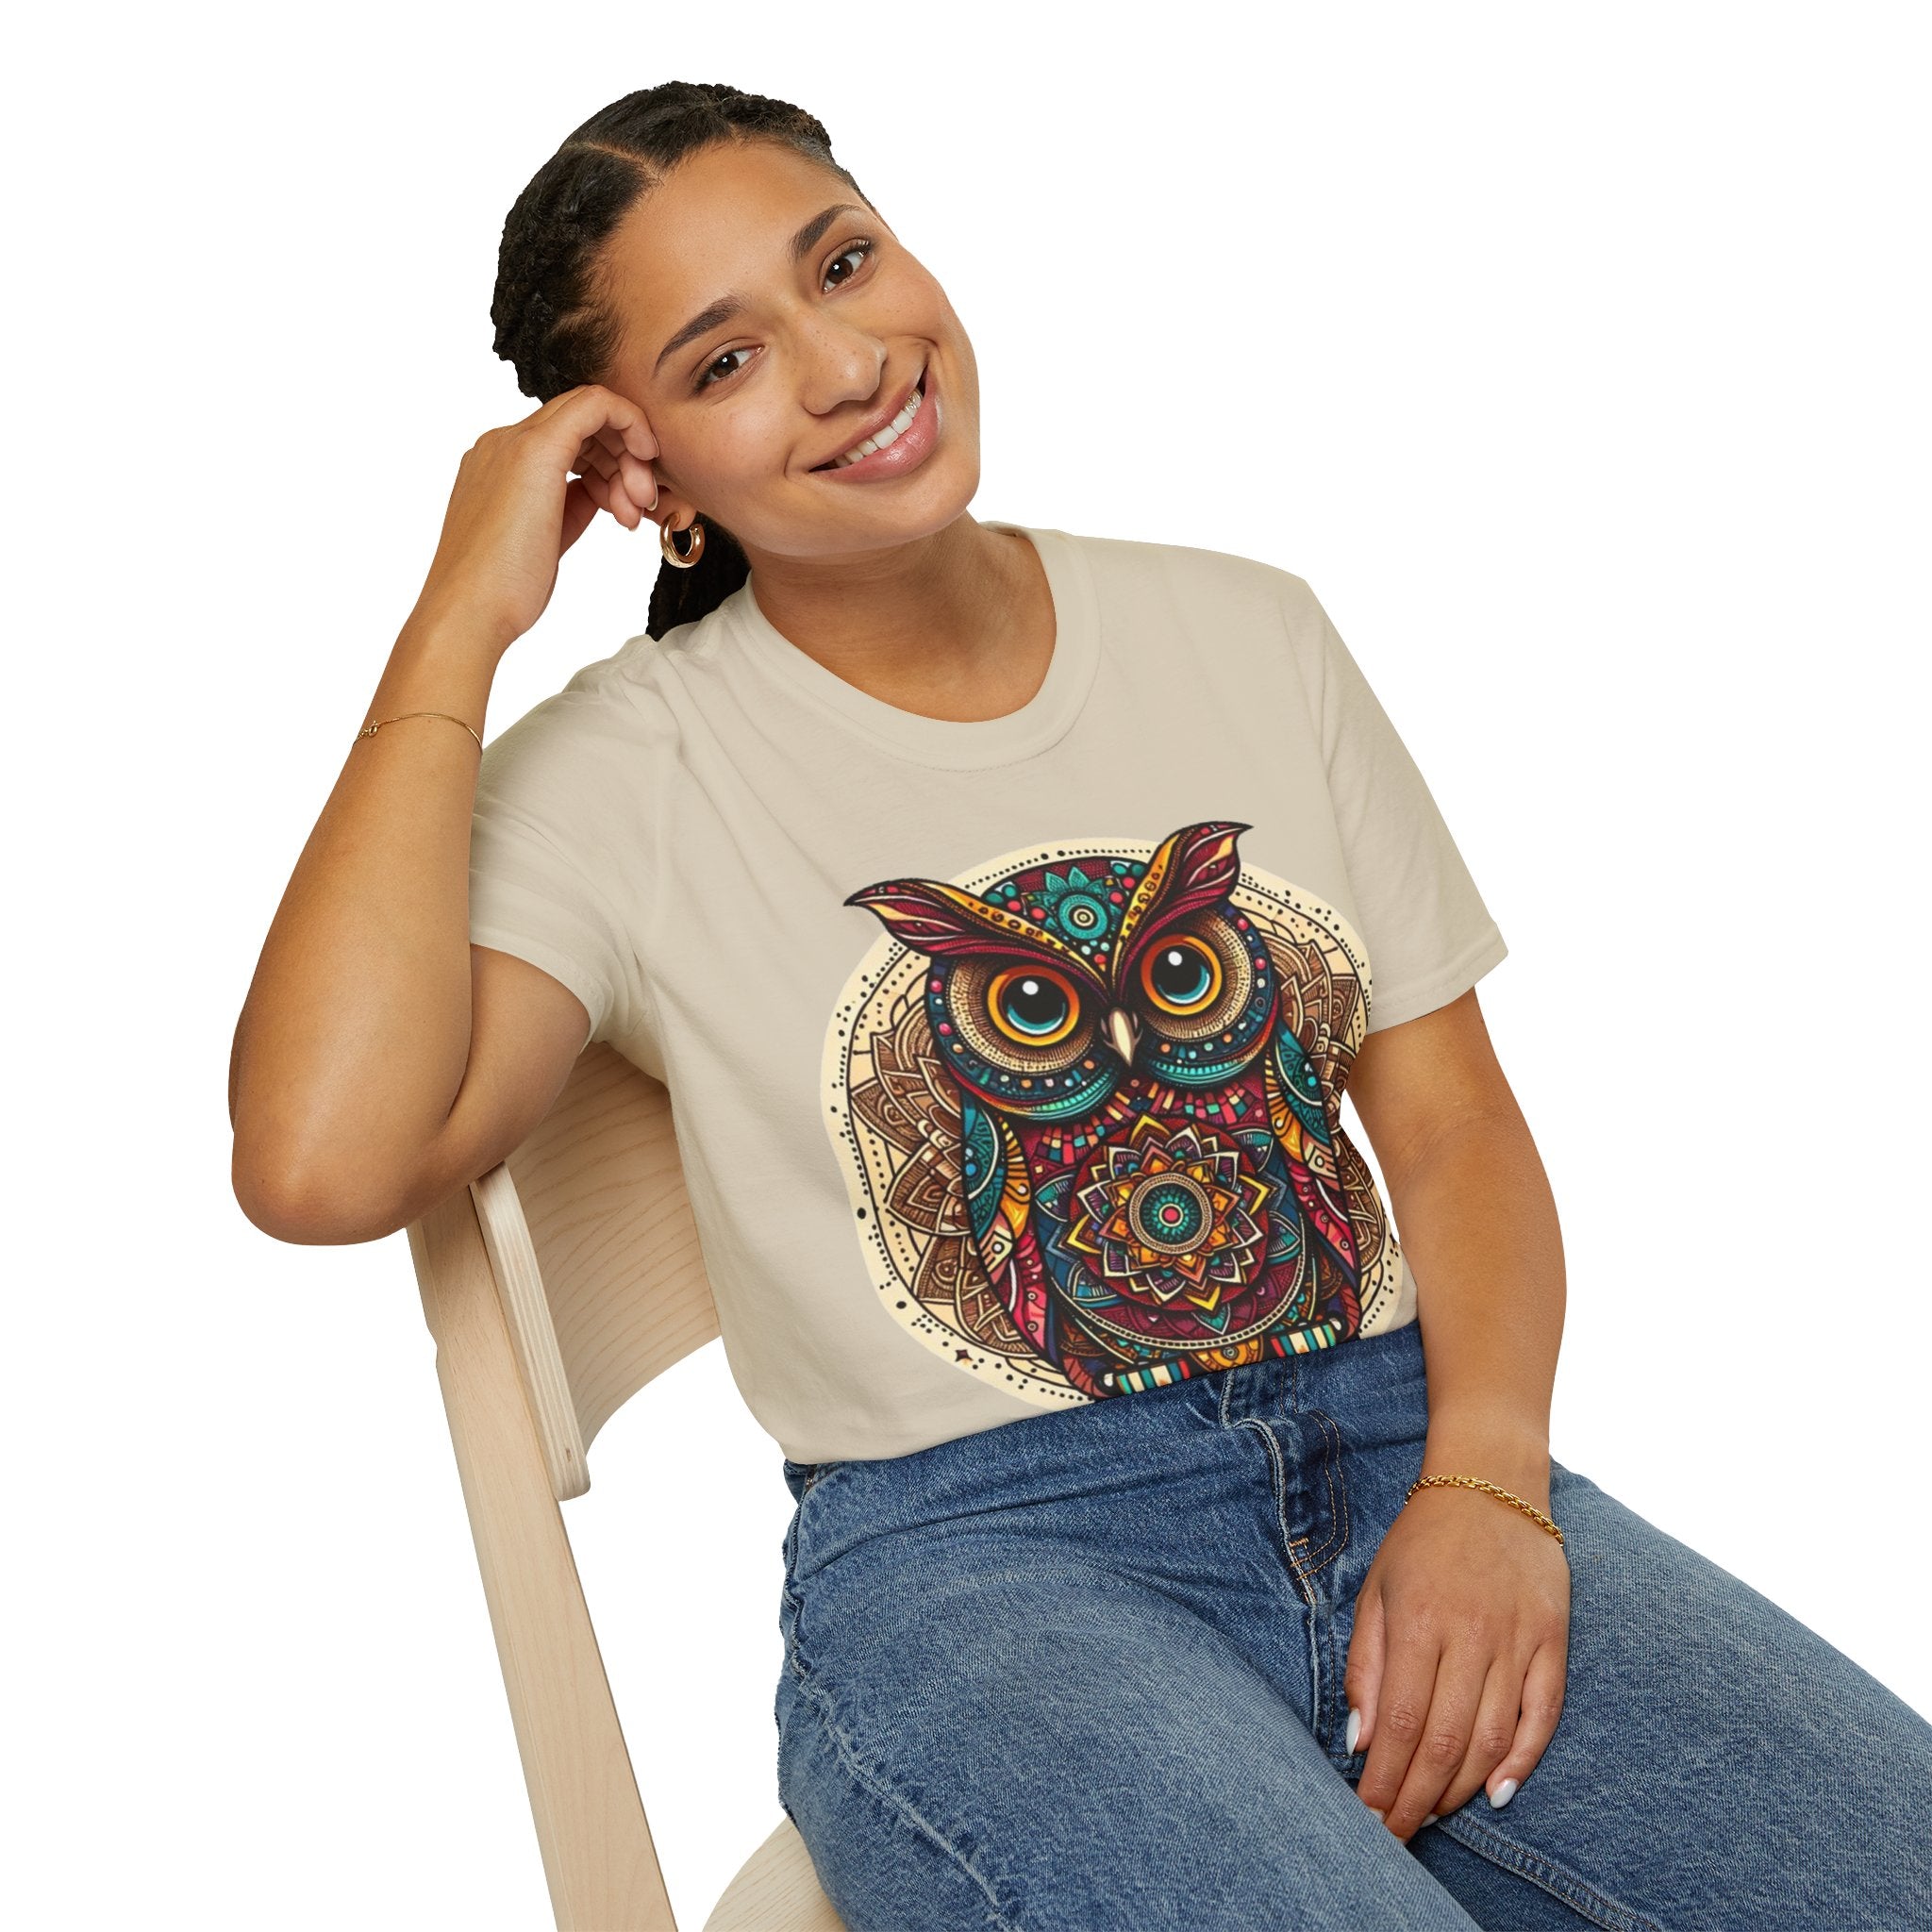 Owl Mandala Tee - Colorful Wisdom by Chai and Code